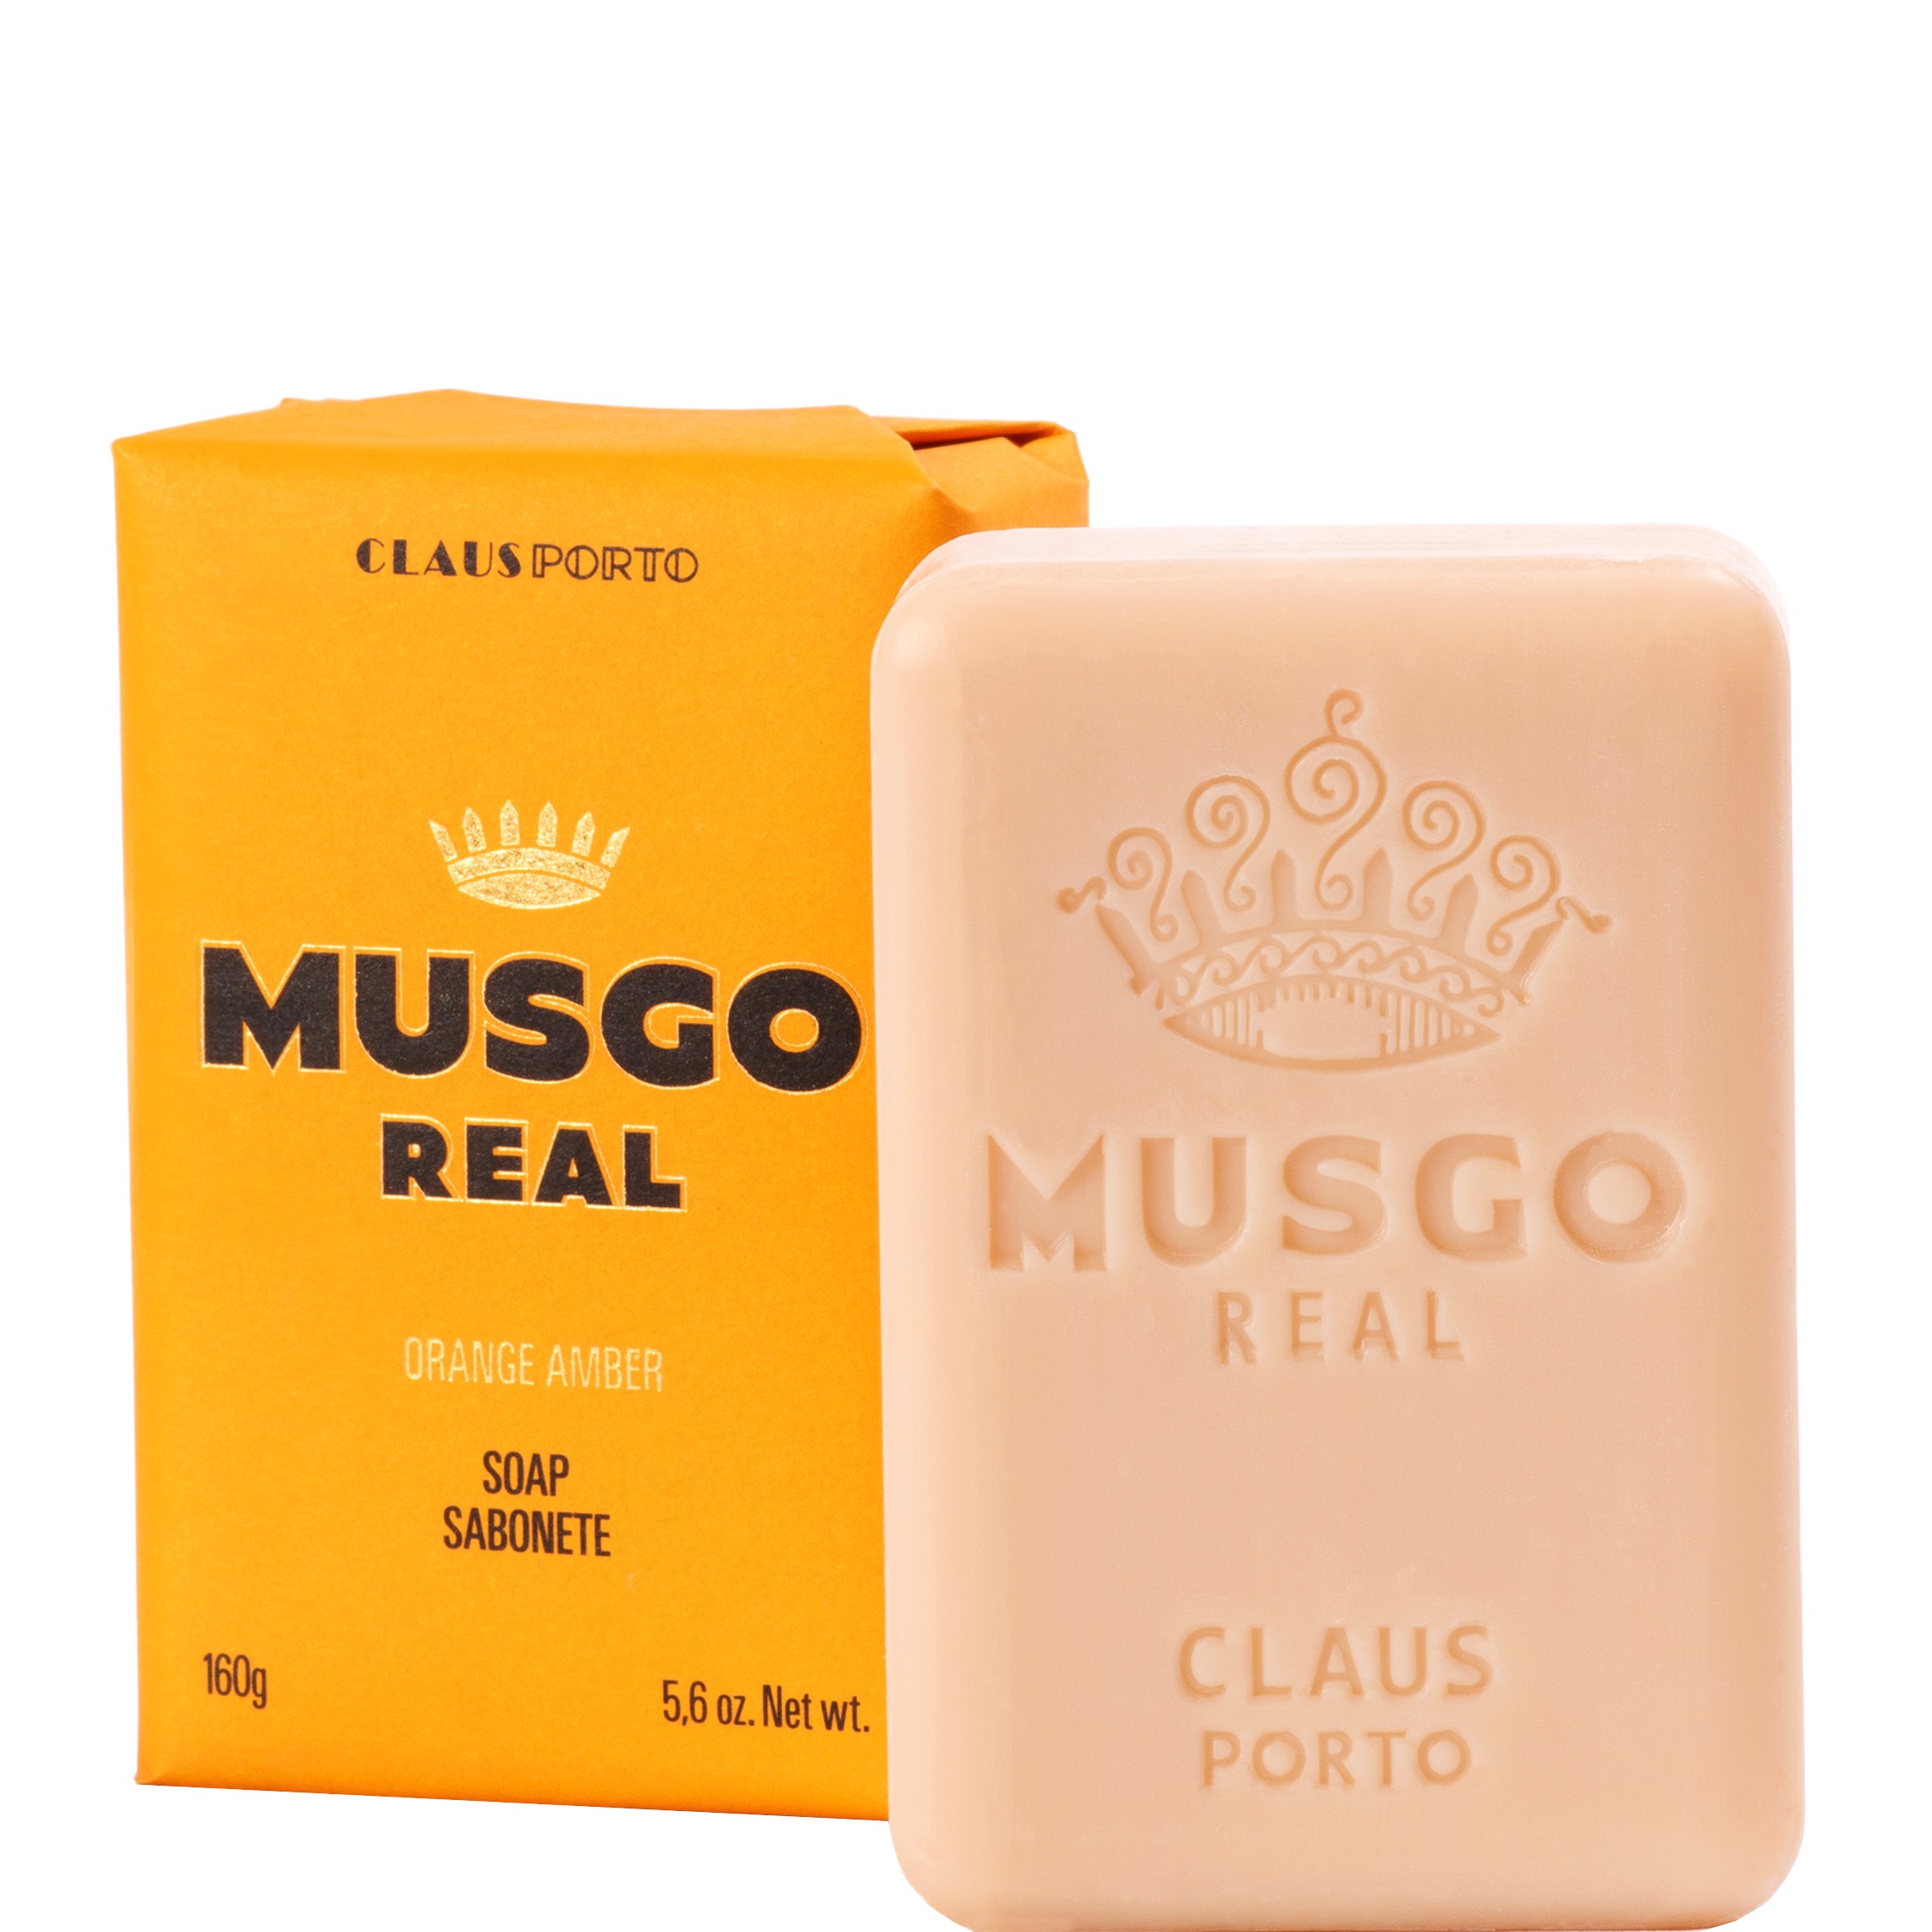 Musgo Real Body Soap Orange Amber 160gr - 1.1 - MR-199EXP001